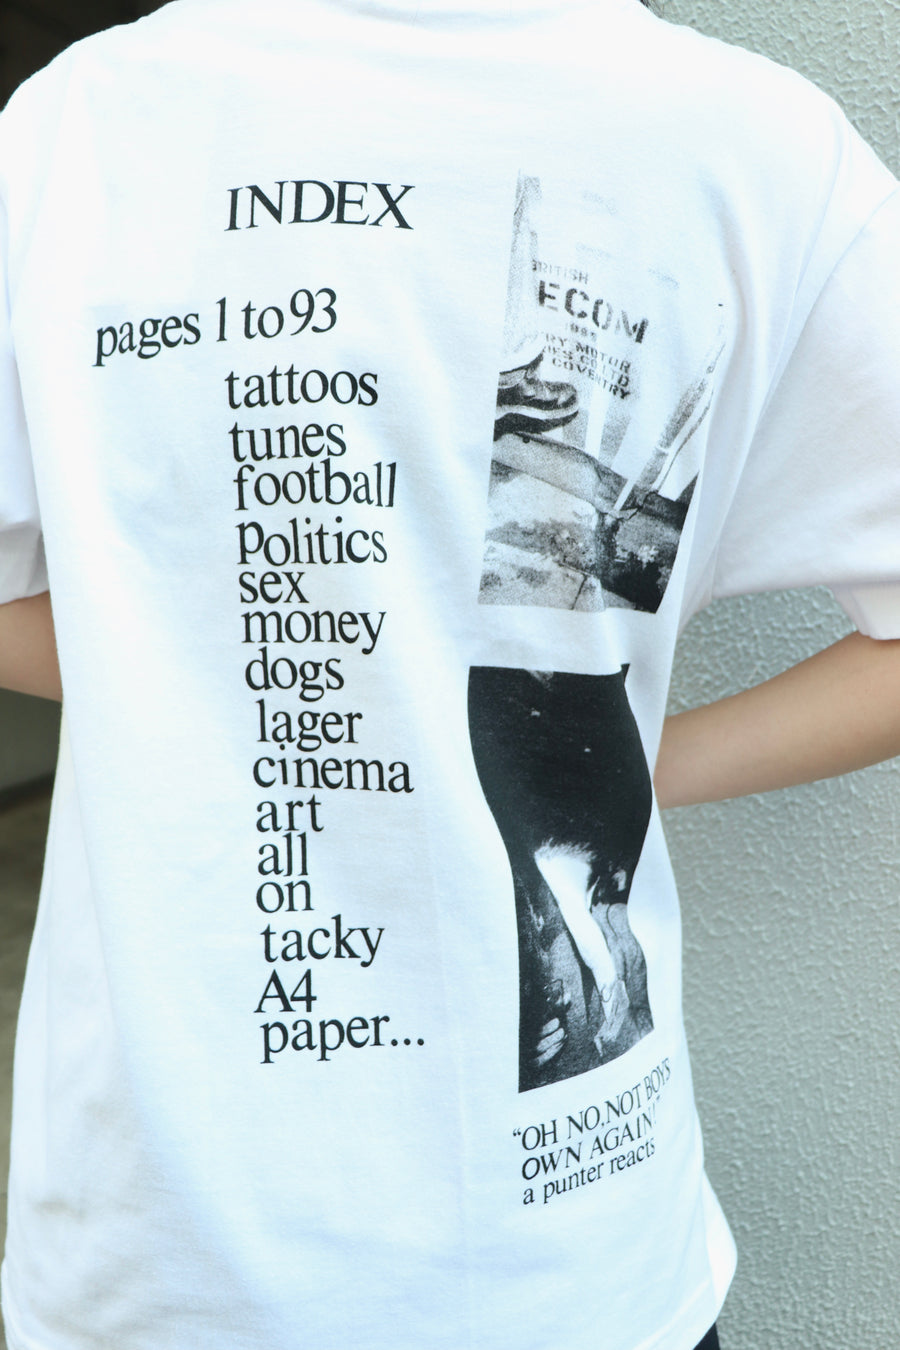 TOGA VIRILIS  Print T-shirt ISSUE ONE BOY'S OWN SP(WHITE)